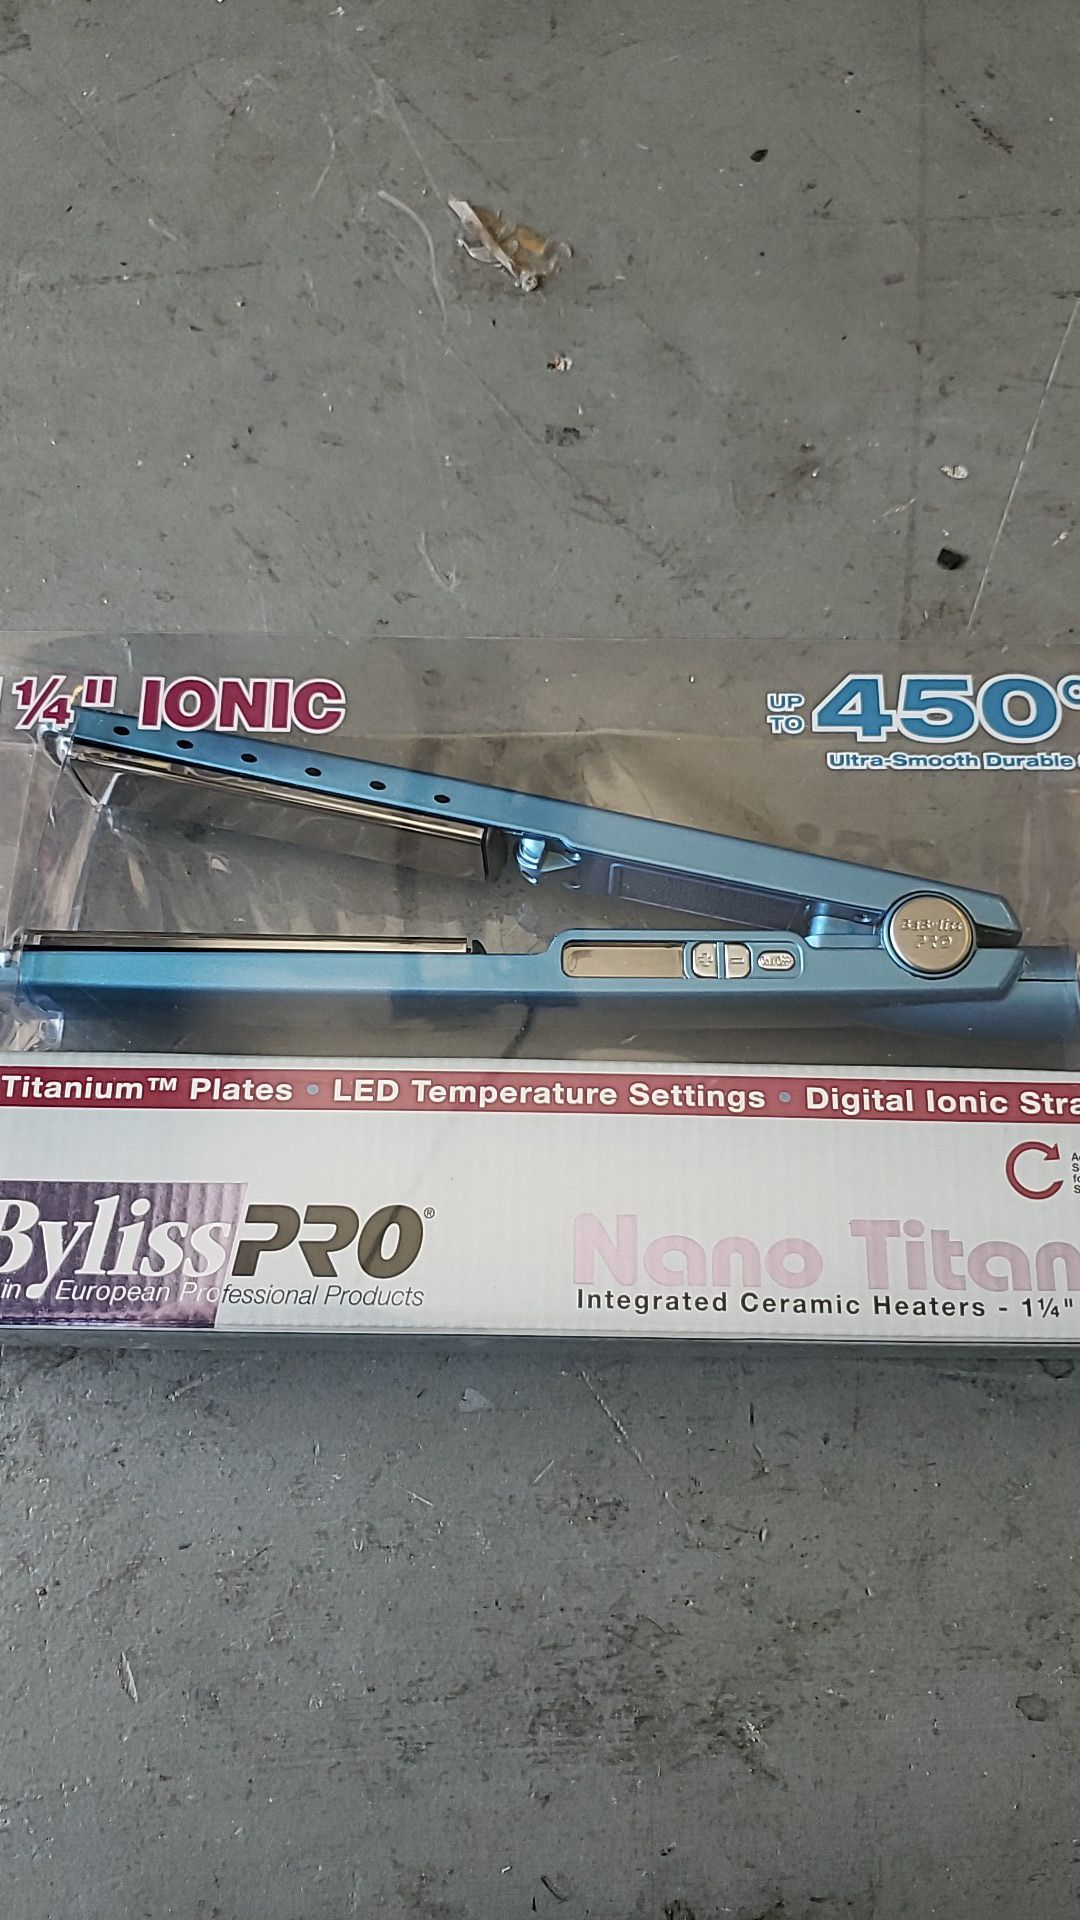 New Babyliss pro hair straightener 1 1/4" ionic led digital settings